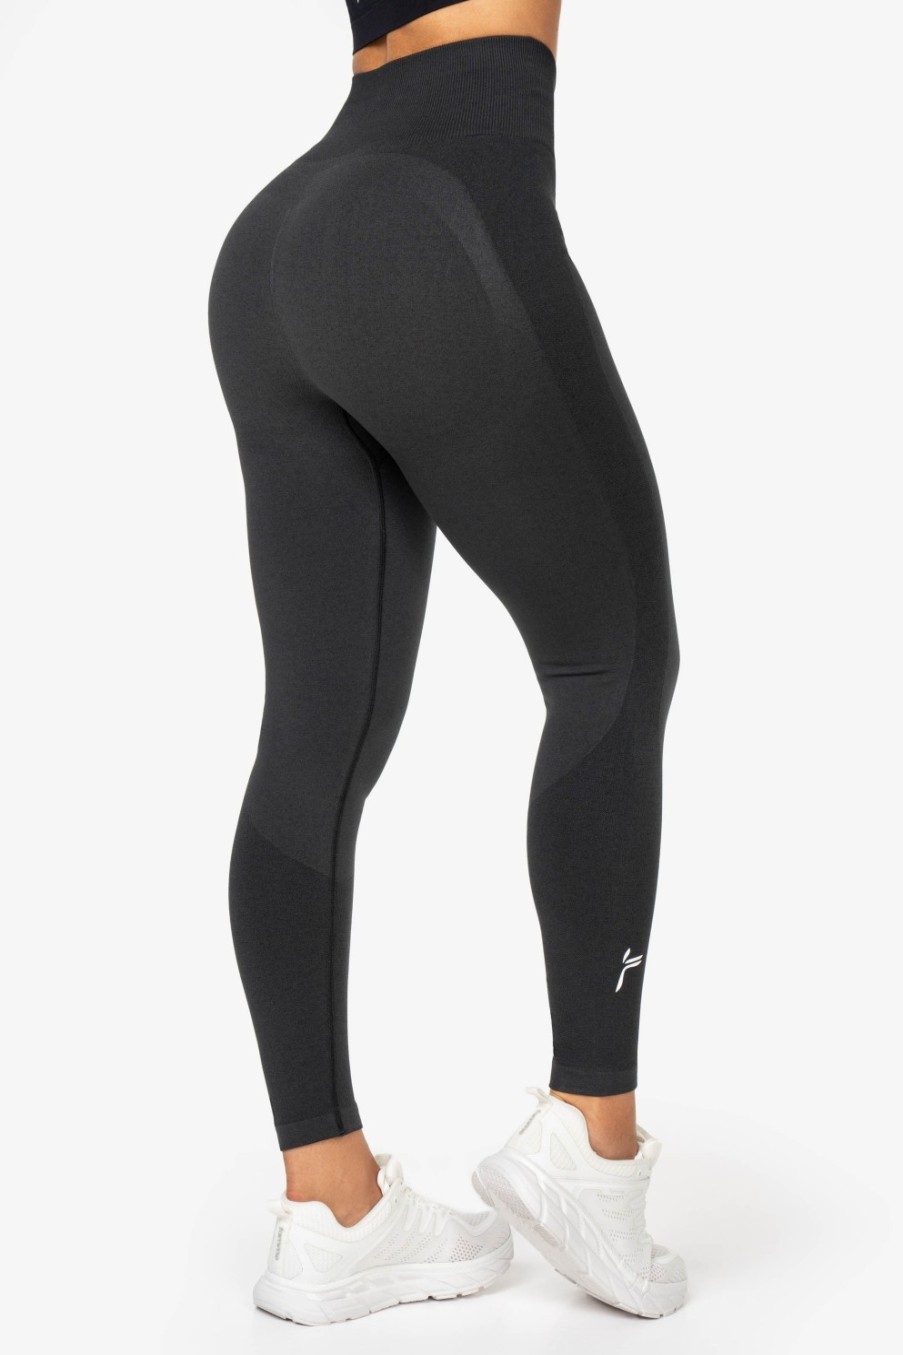 comfortable seamless tights Dark Grey Wave Leggings from Famme sportswear